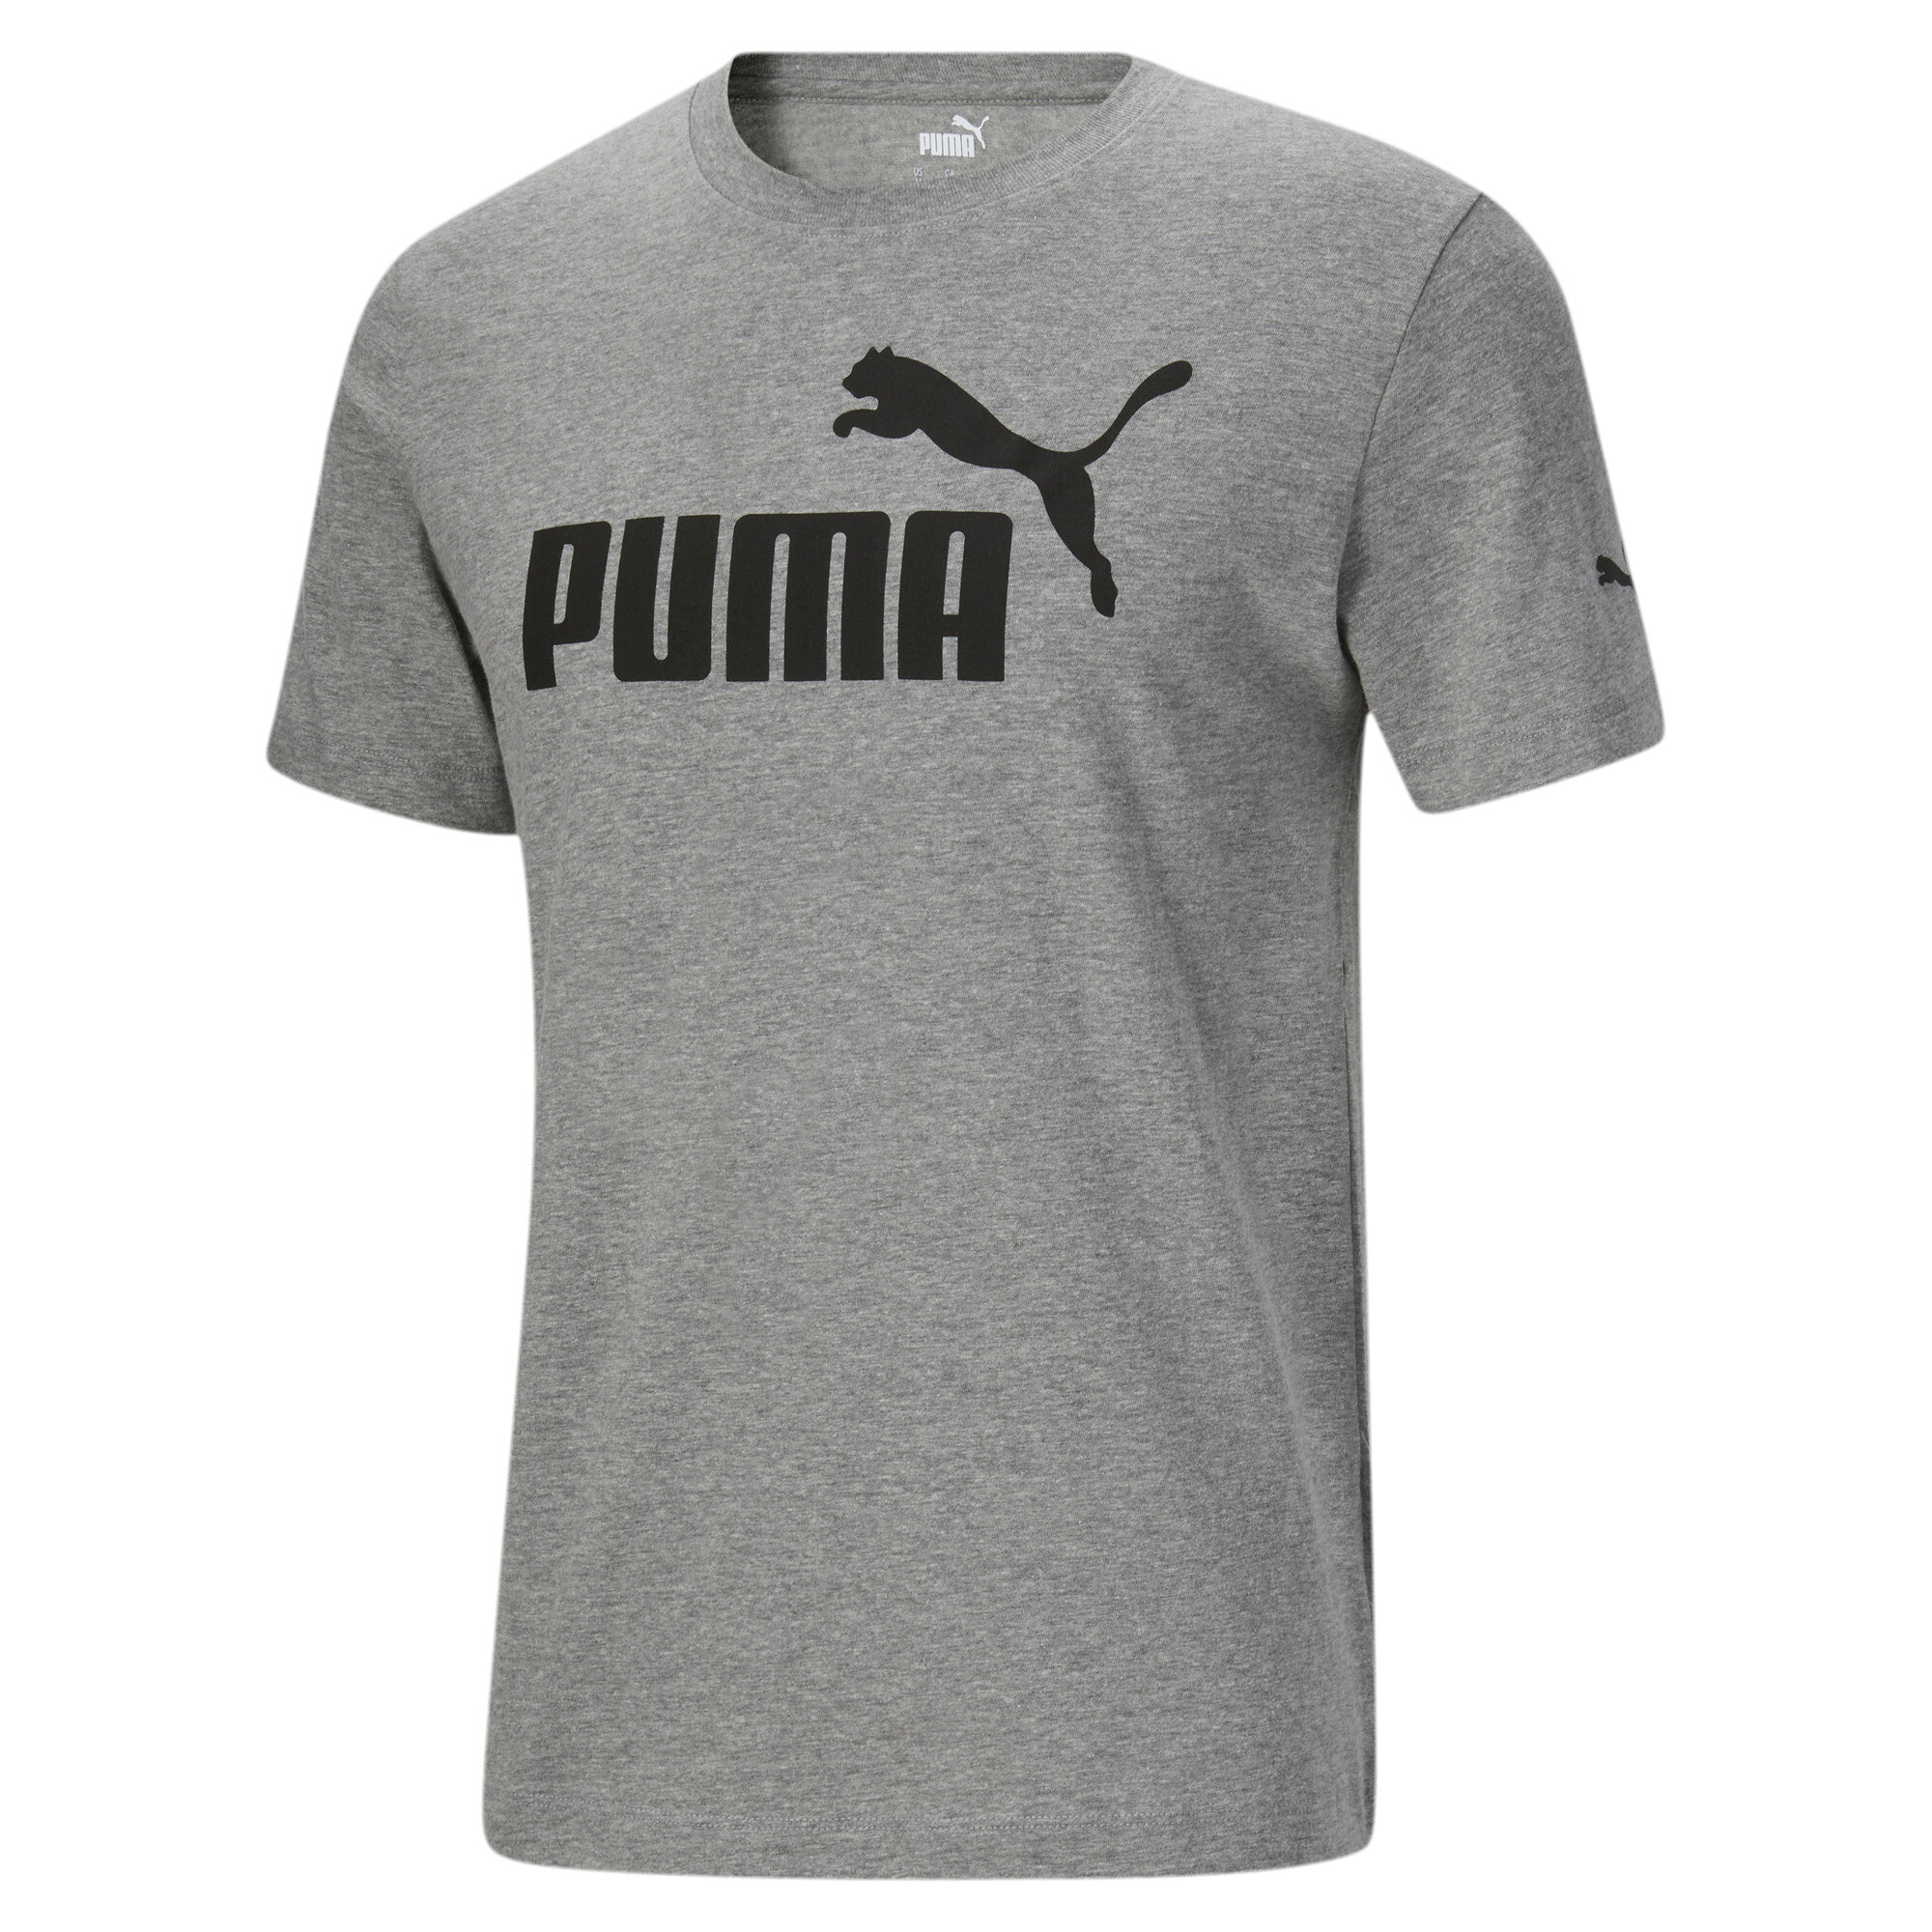 PUMA Essentials Men's Logo T-Shirt Heather Size S - Medium Grey 